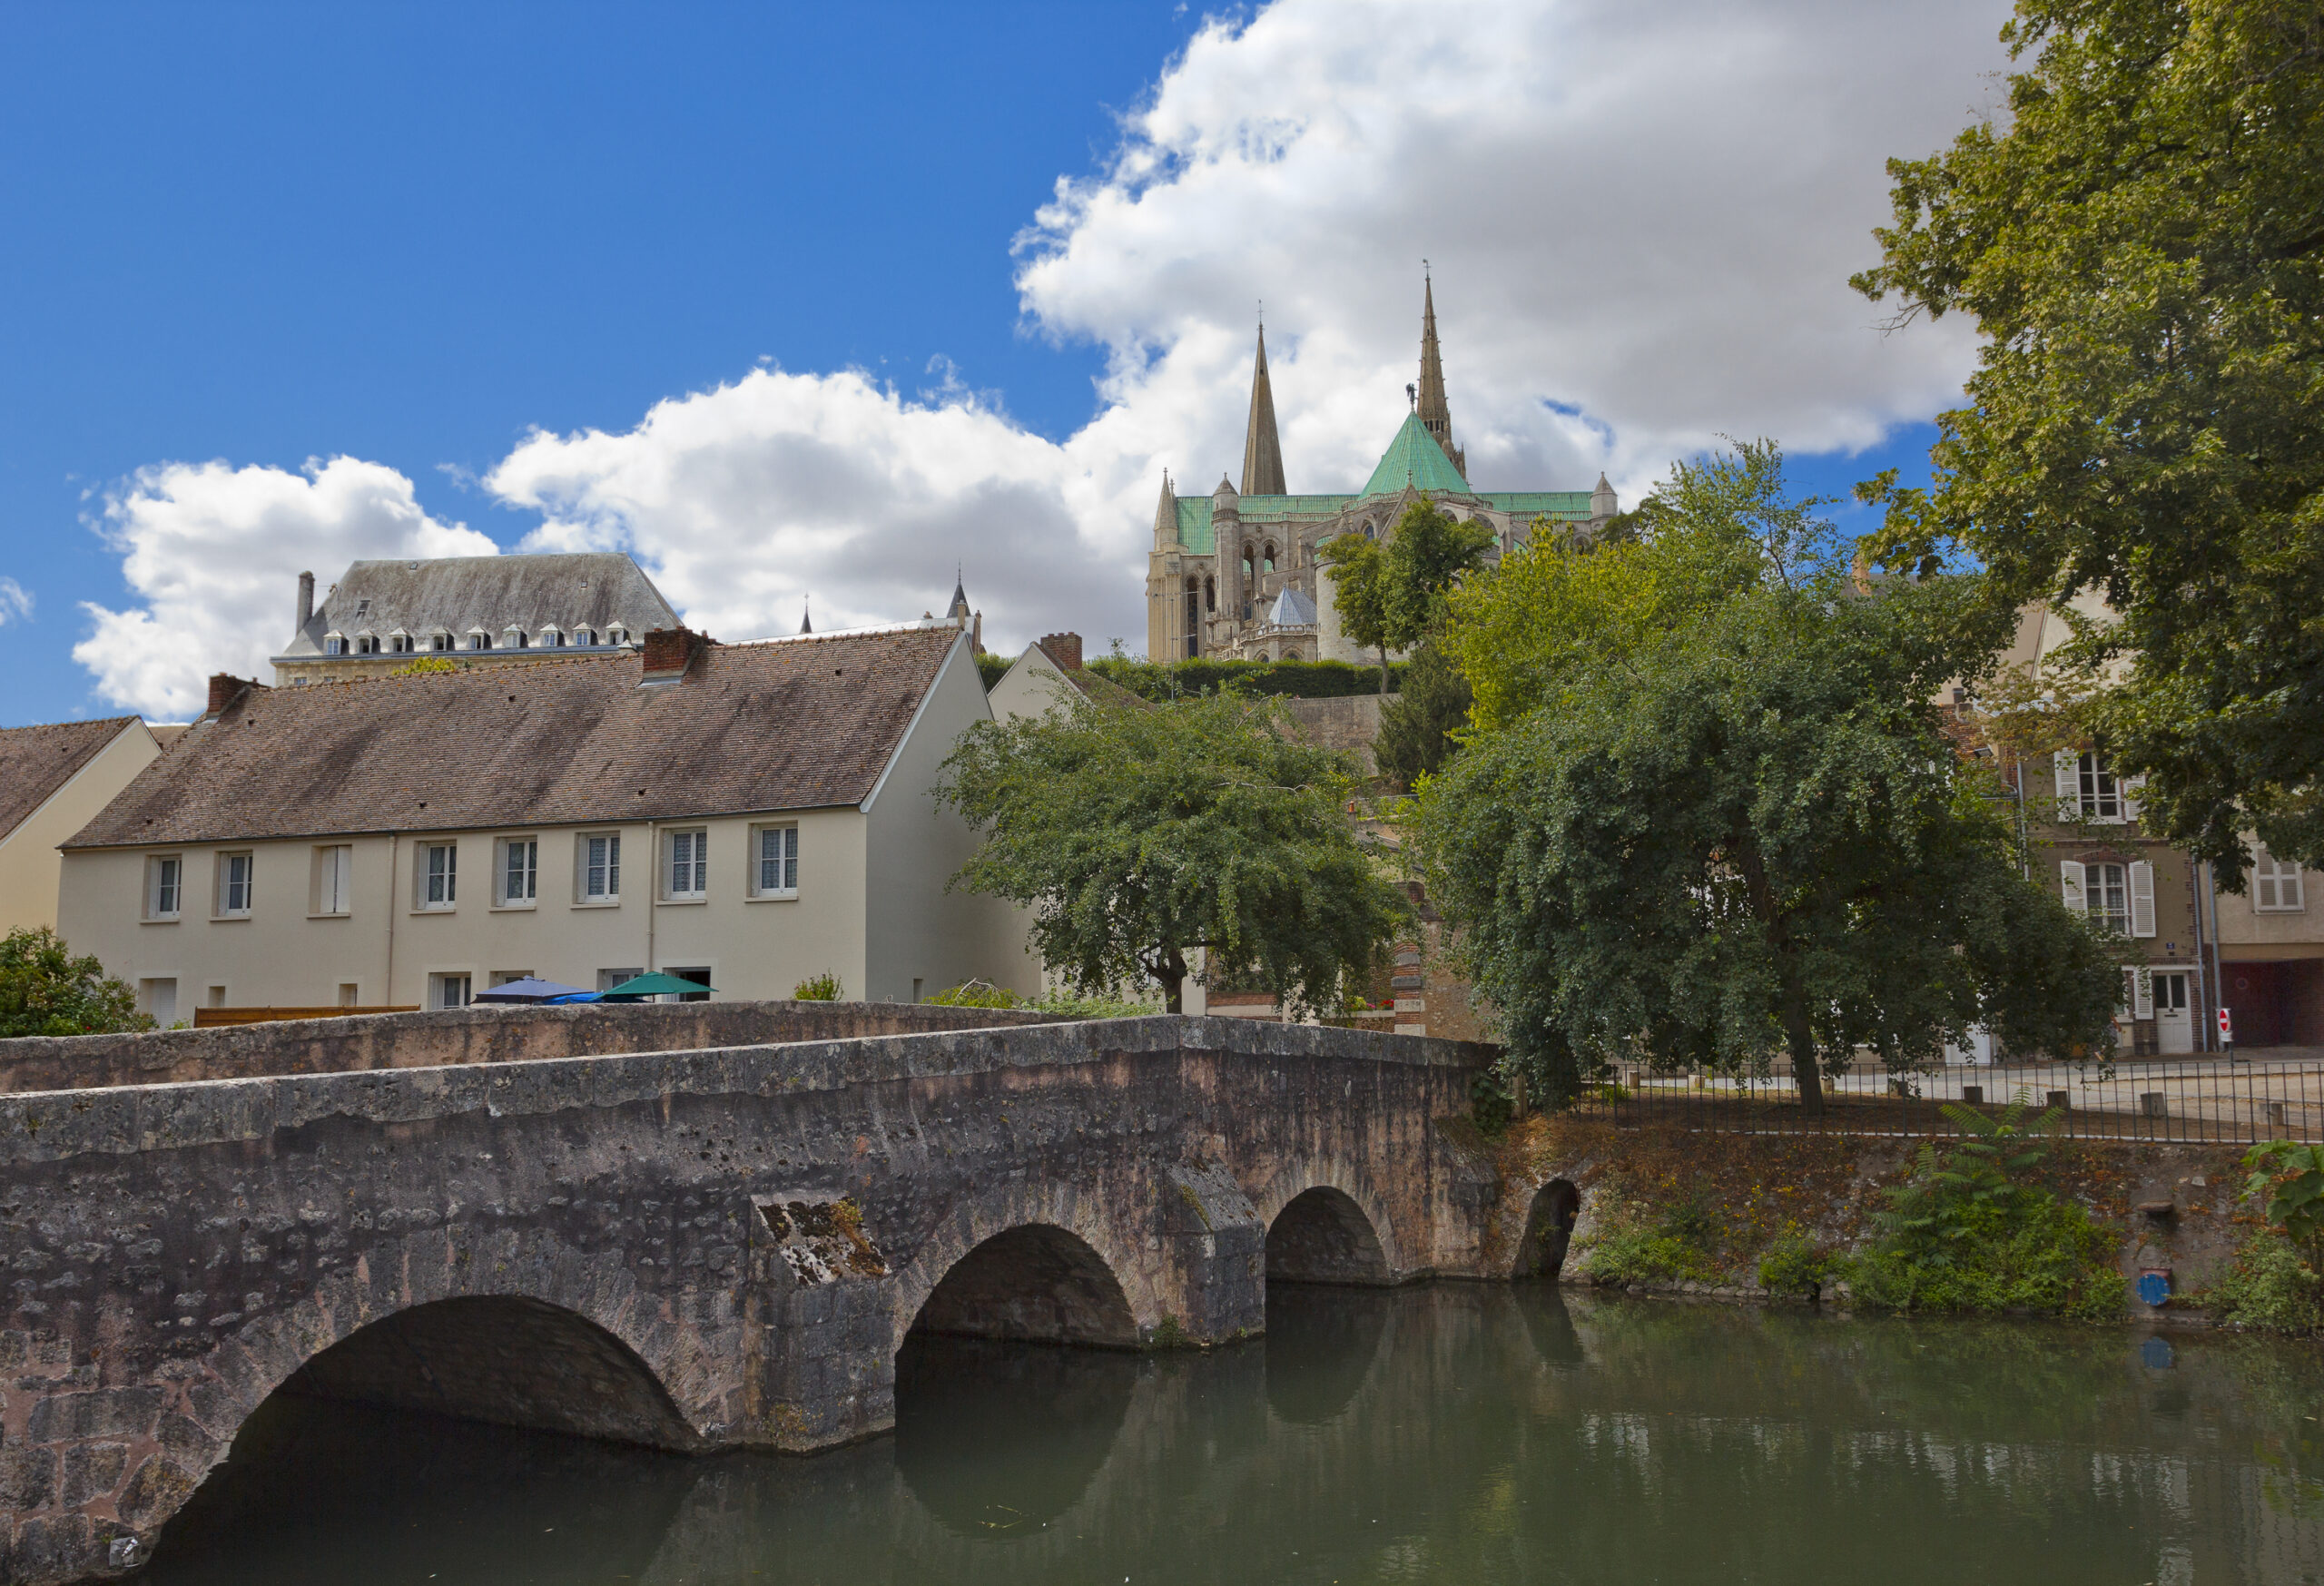 Historic quarter of Chartres, France